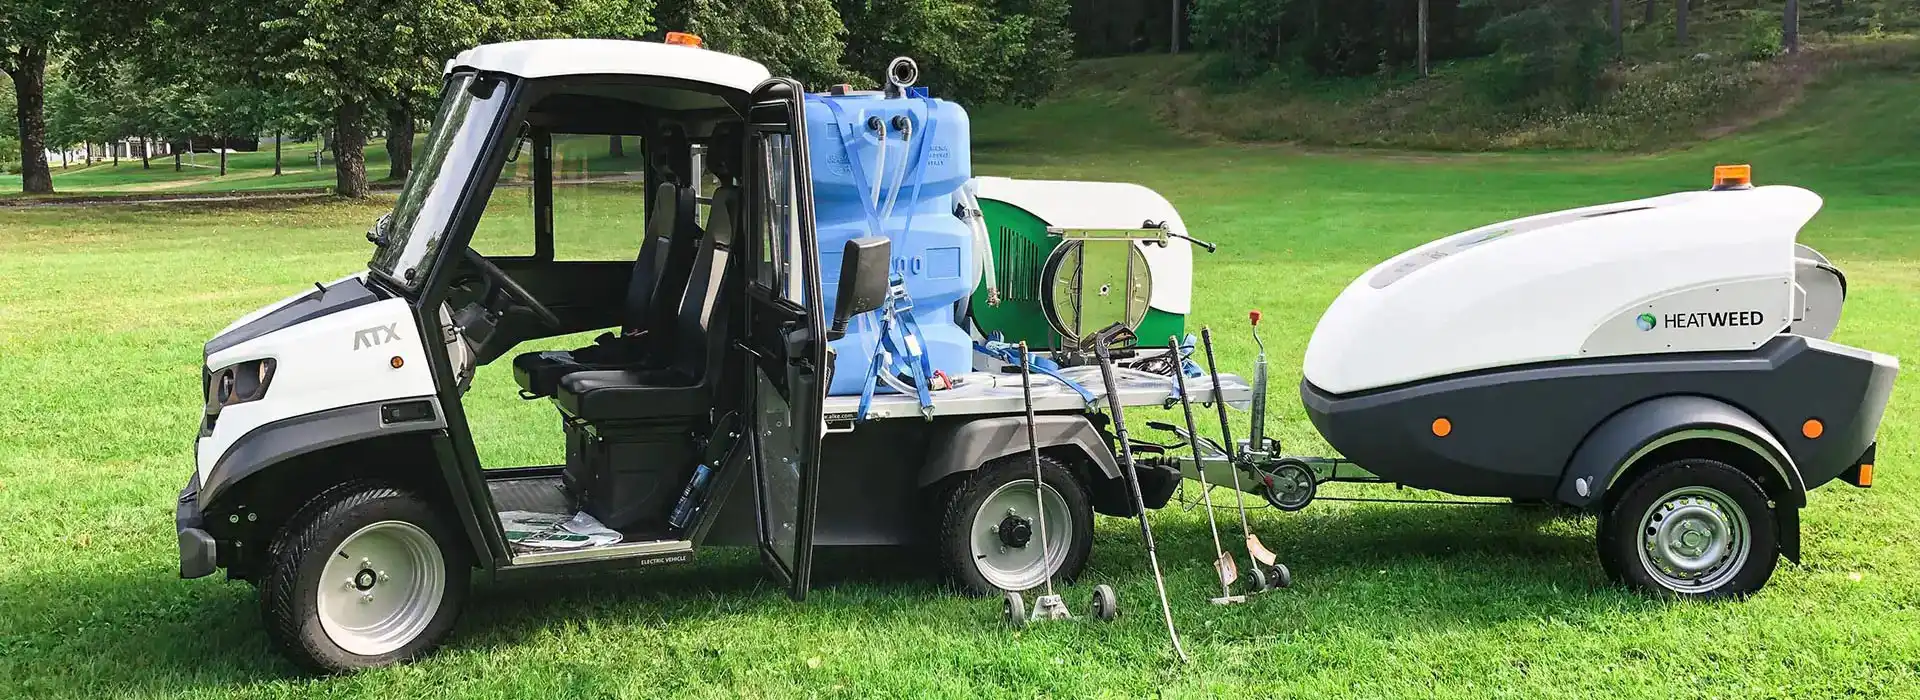 Um buggy de golfe N1 robusto como um veículo todo-o-terreno